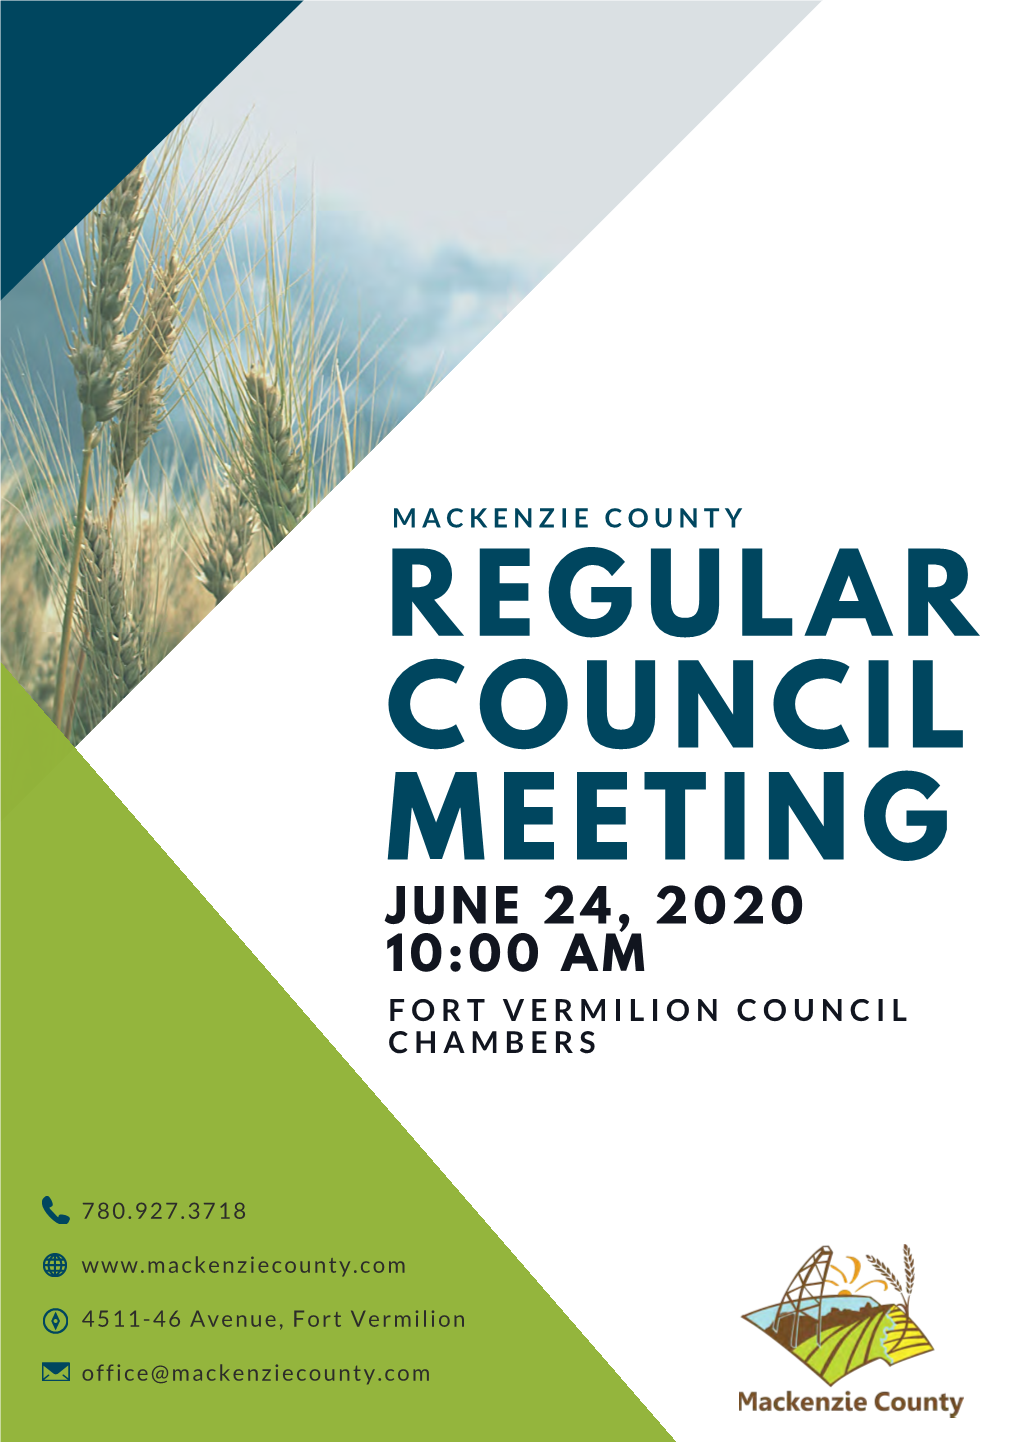 Regular Council Meeting June 24, 2020 10:00 Am Fort Vermilion Council Chambers